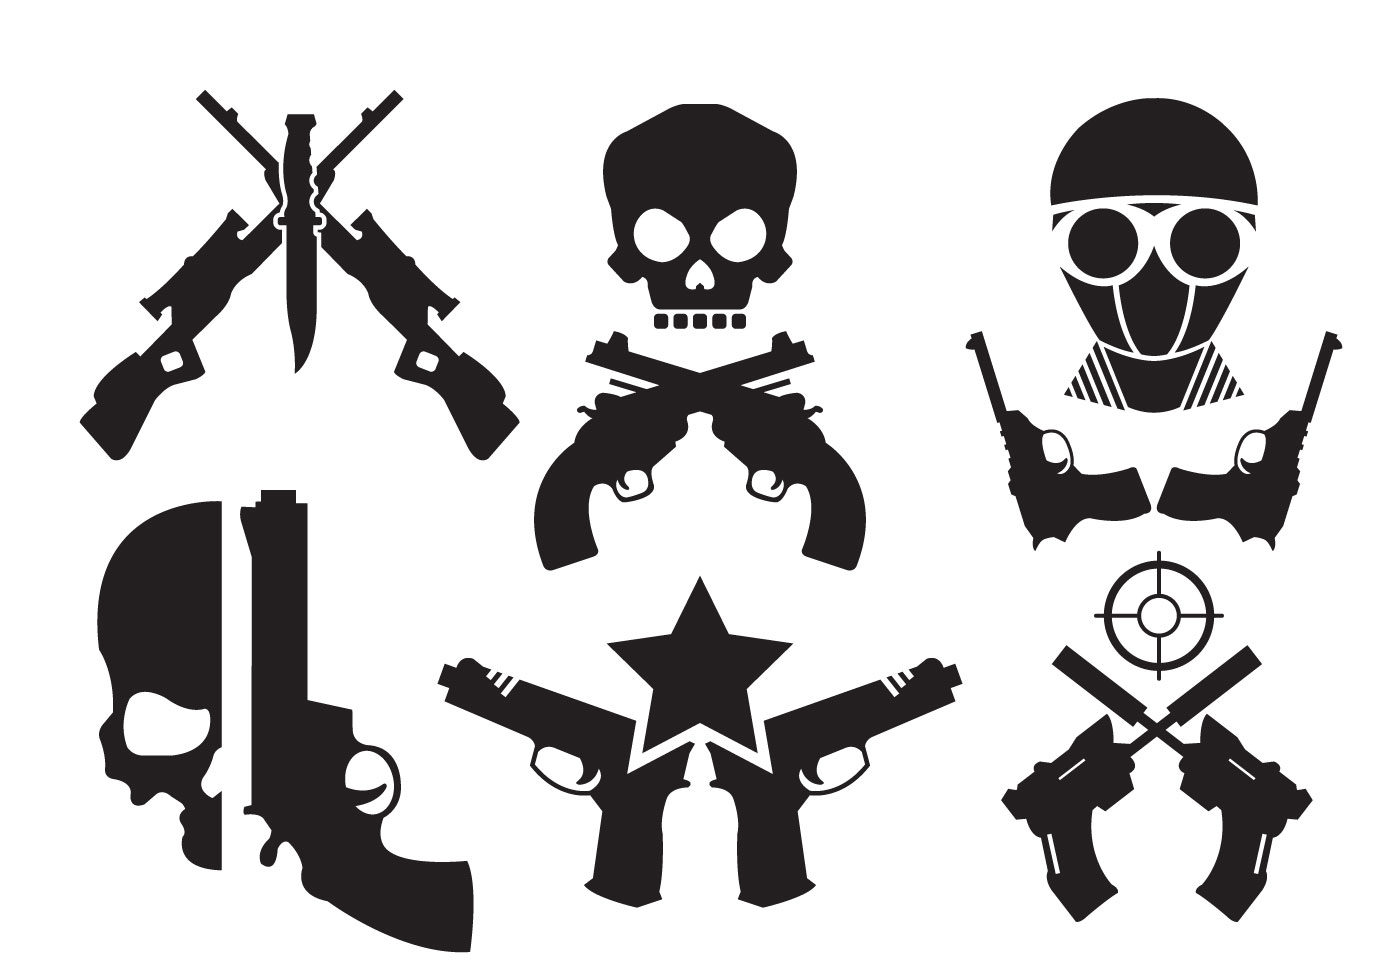 Download Crossed Gun Vectors - Download Free Vectors, Clipart Graphics & Vector Art